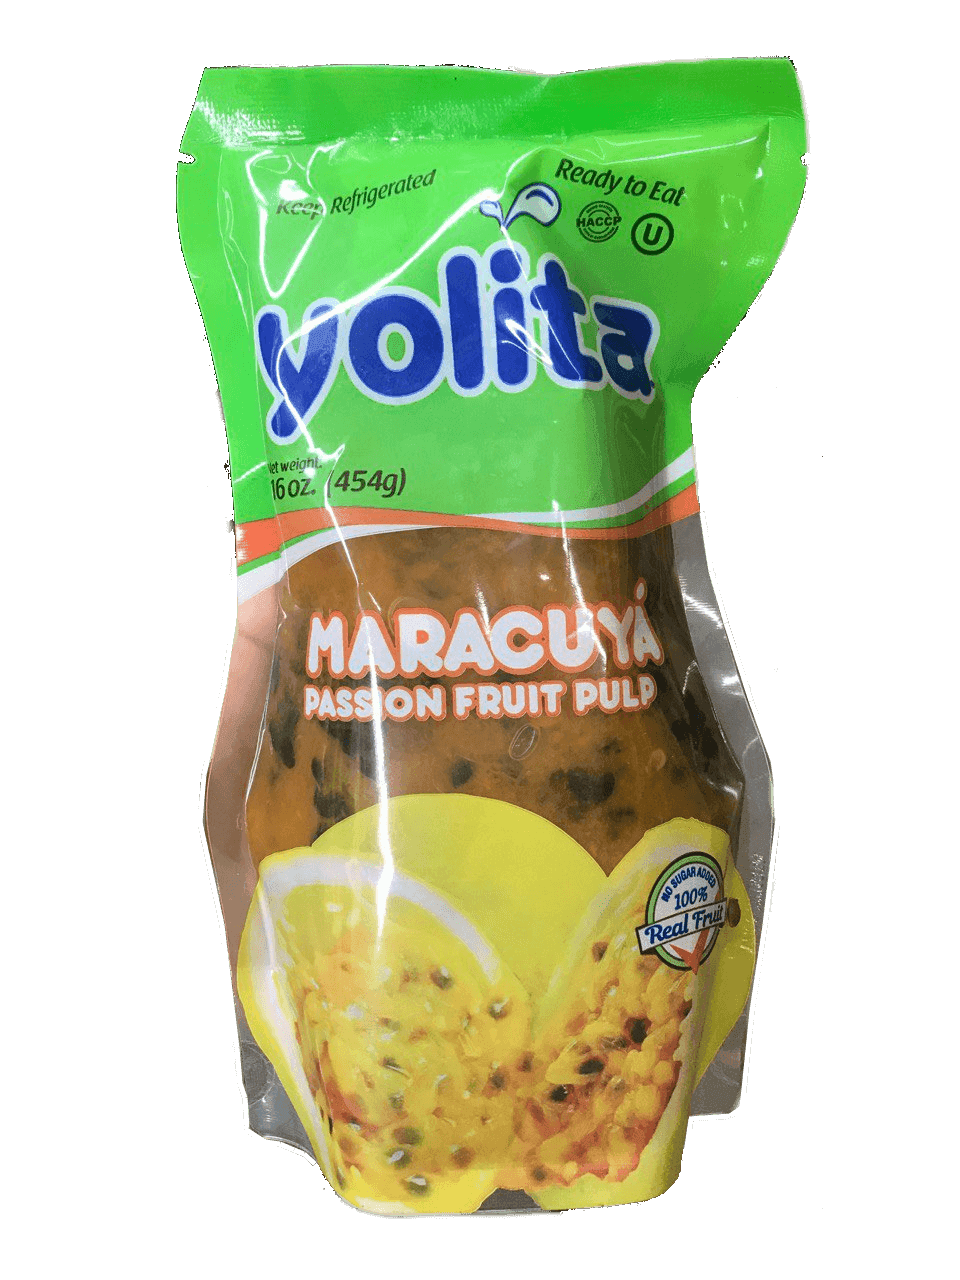 Yolita - Passion Fruit Pulp 16oz